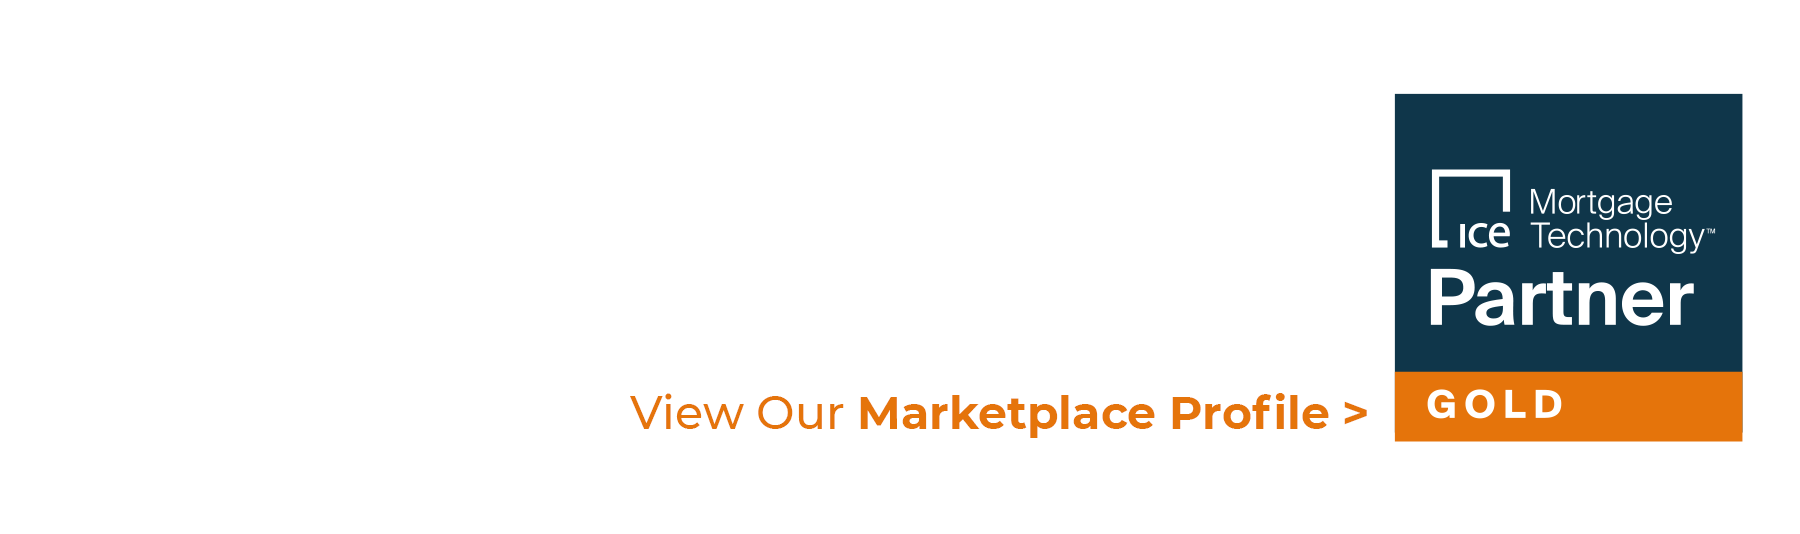 LenderLogix-ICE-Mortgage-Technology-GoldPartner-ViewMarketplace-CTA